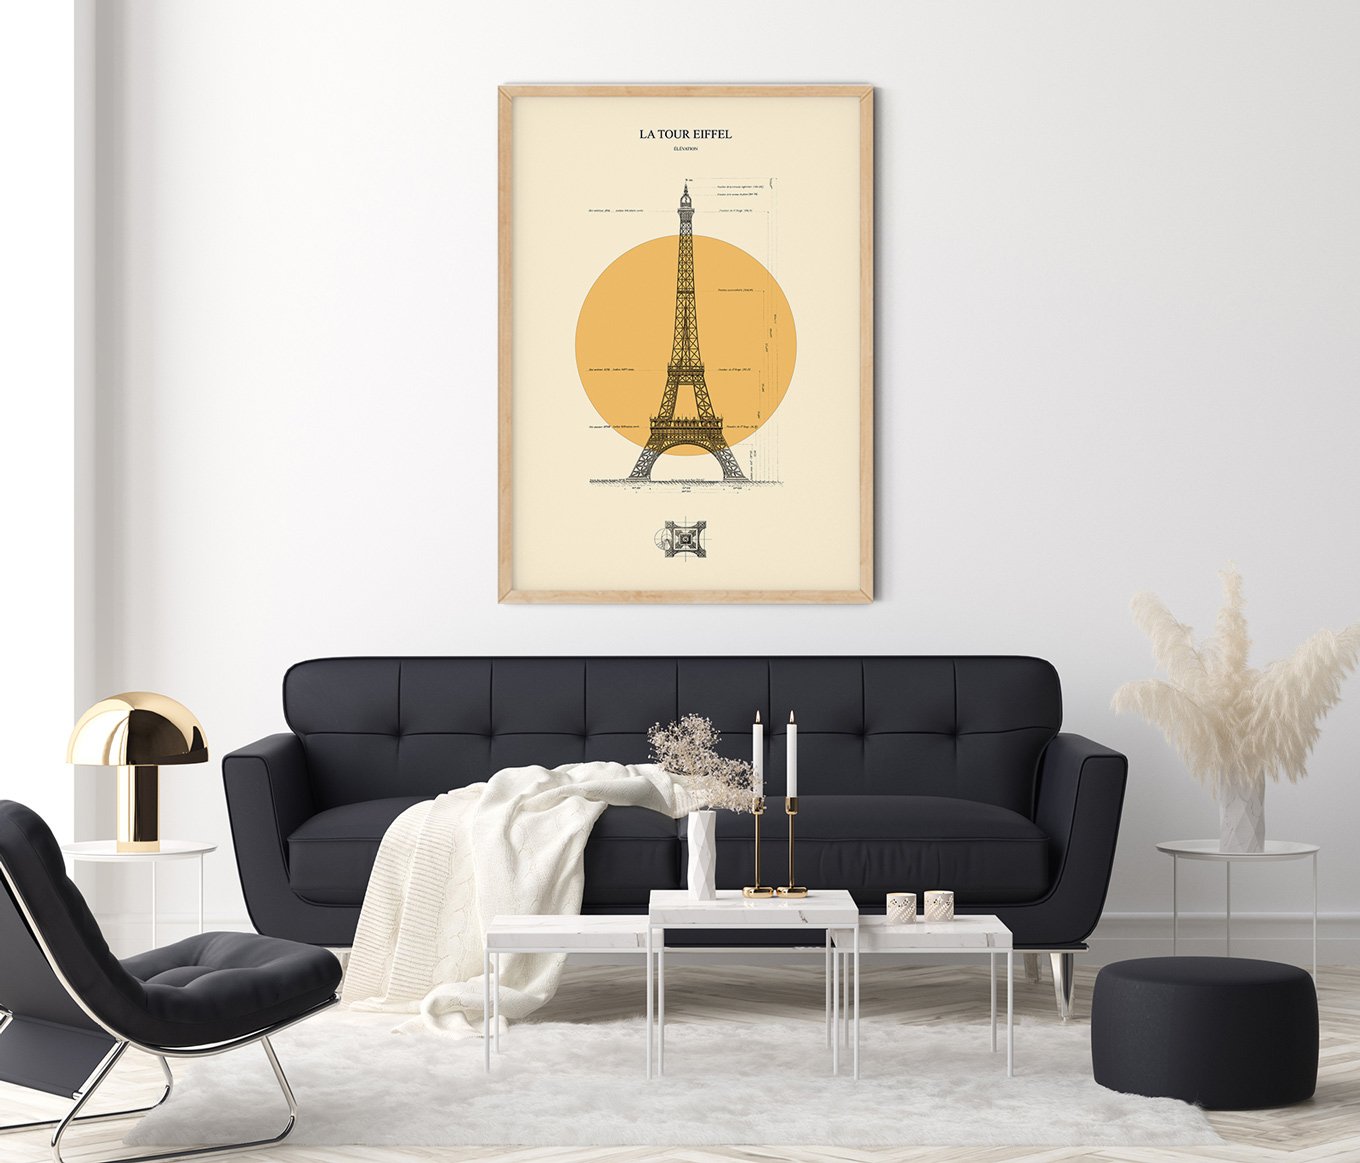 La Tour Eiffel with Circle Architecture Poster